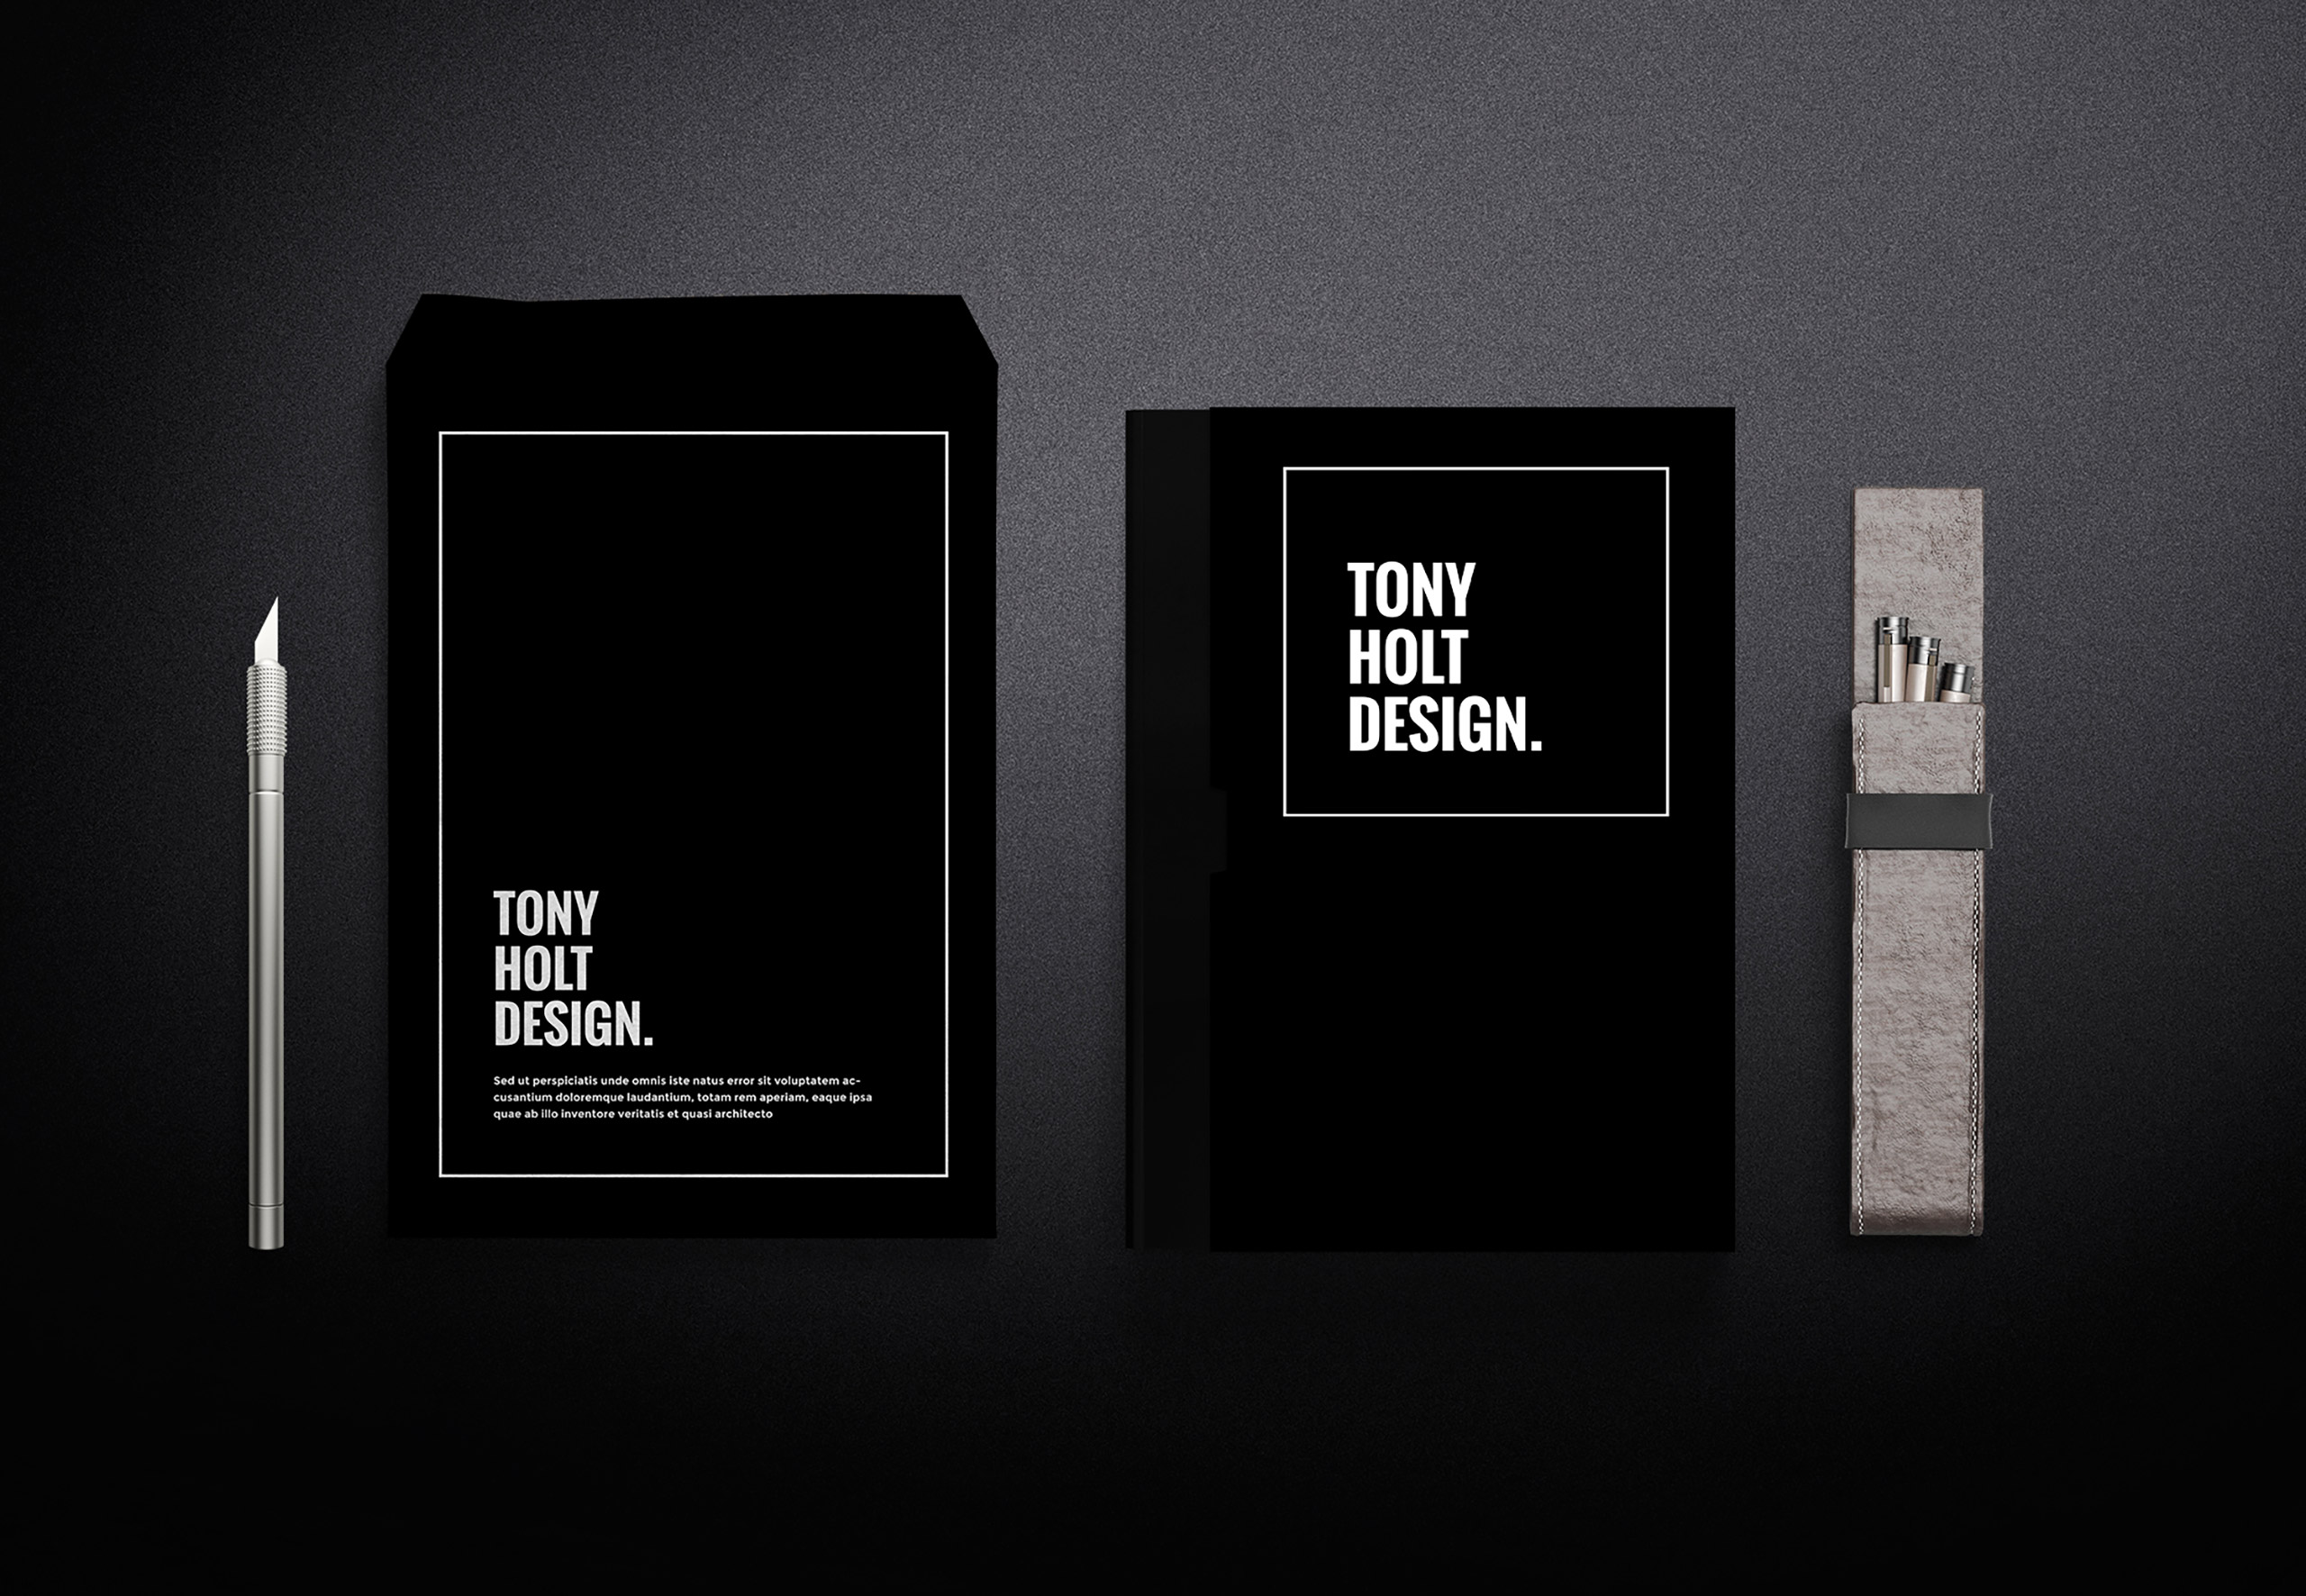 Tony Holt Design